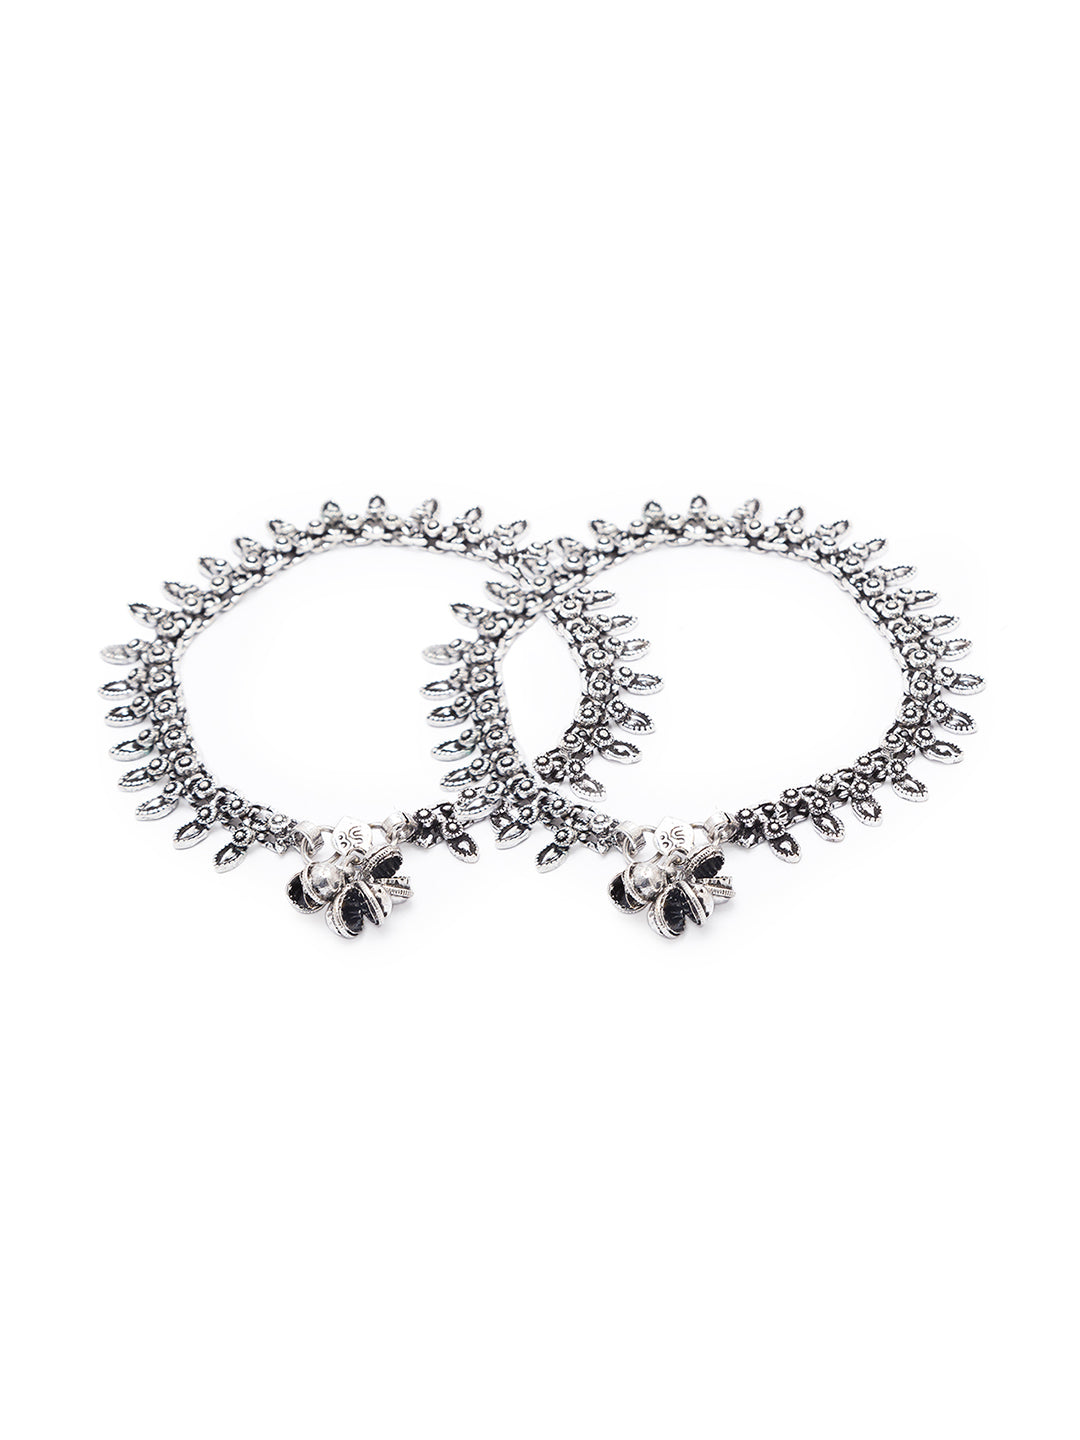 German Oxidised Silver Anklets Floral/Drop Leaf Design Payal Silver Plating Ghungroo Foot Jewellery